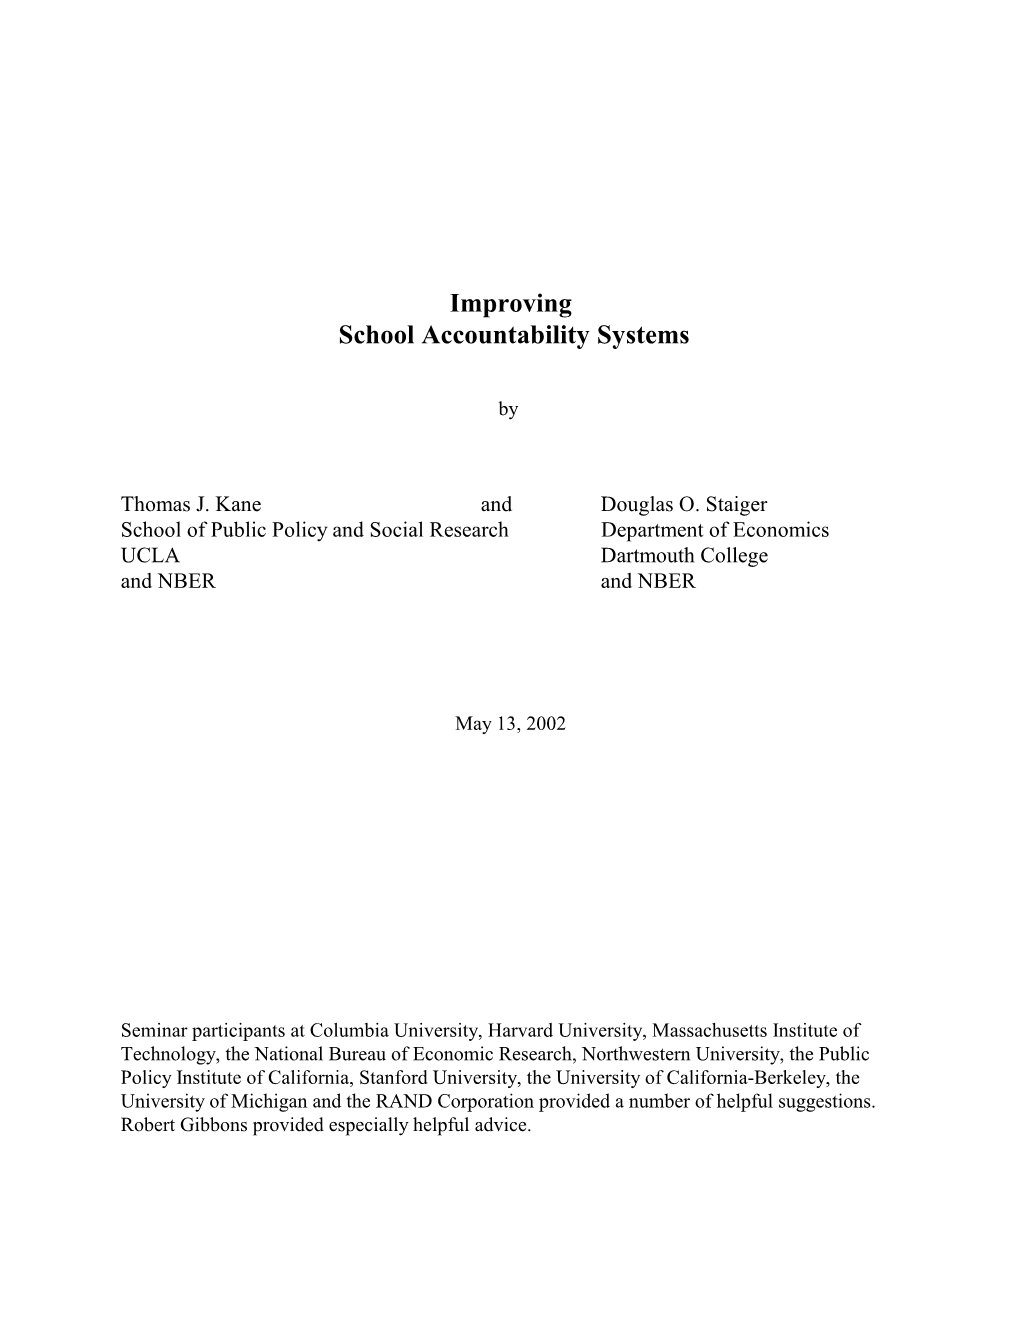 Improving School Accountability Systems